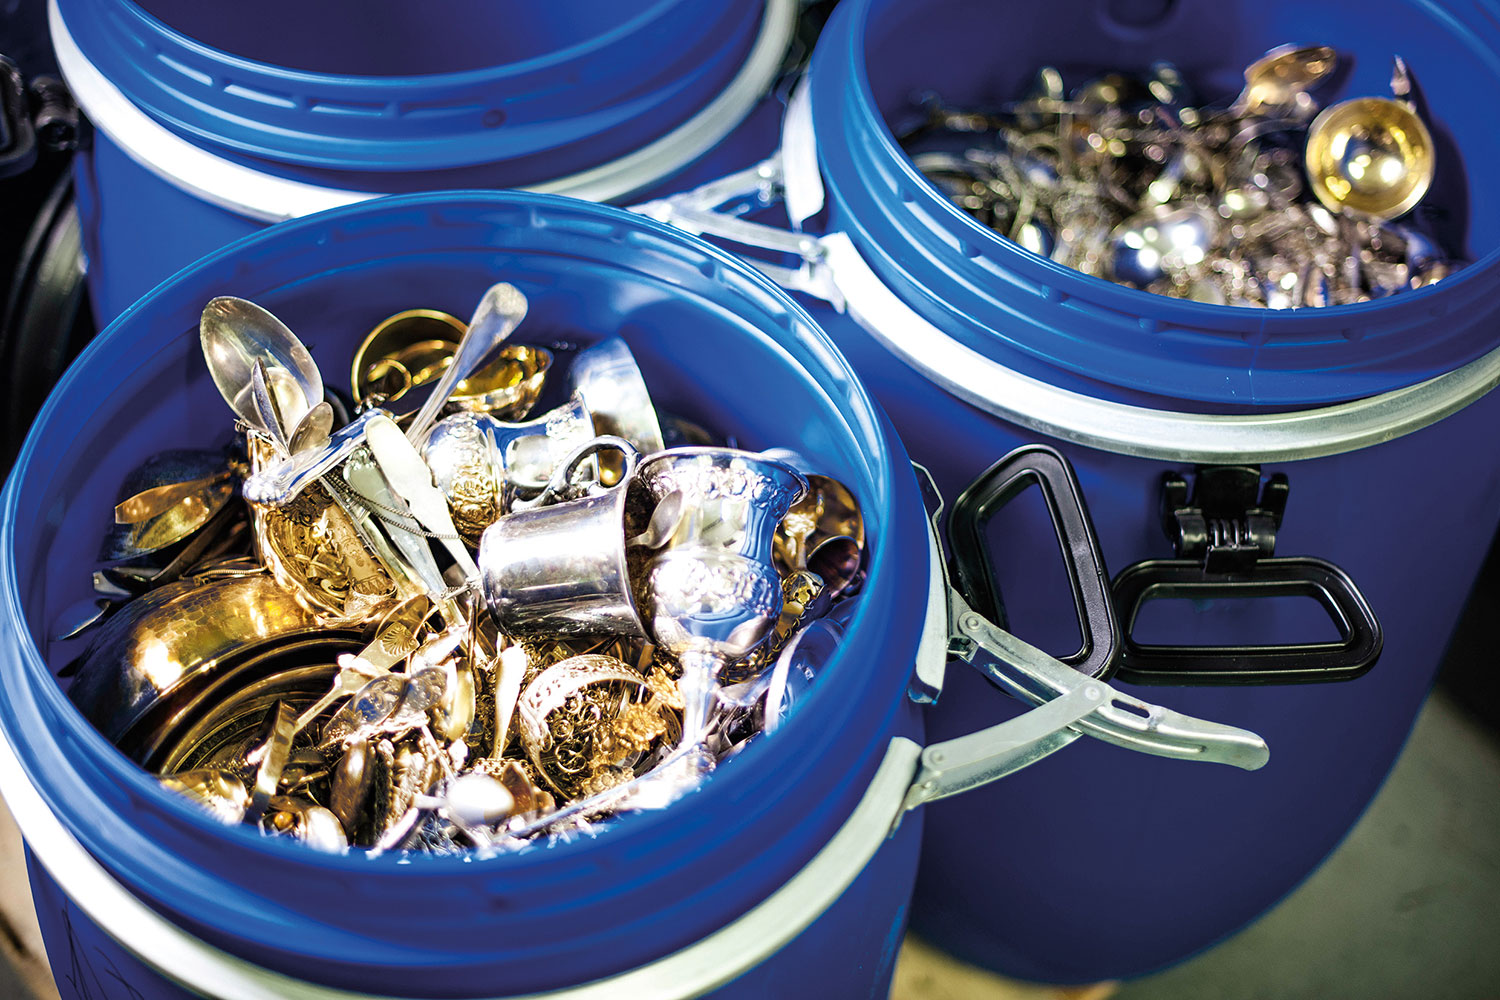 Precious metals destined for recycling at C Hafner